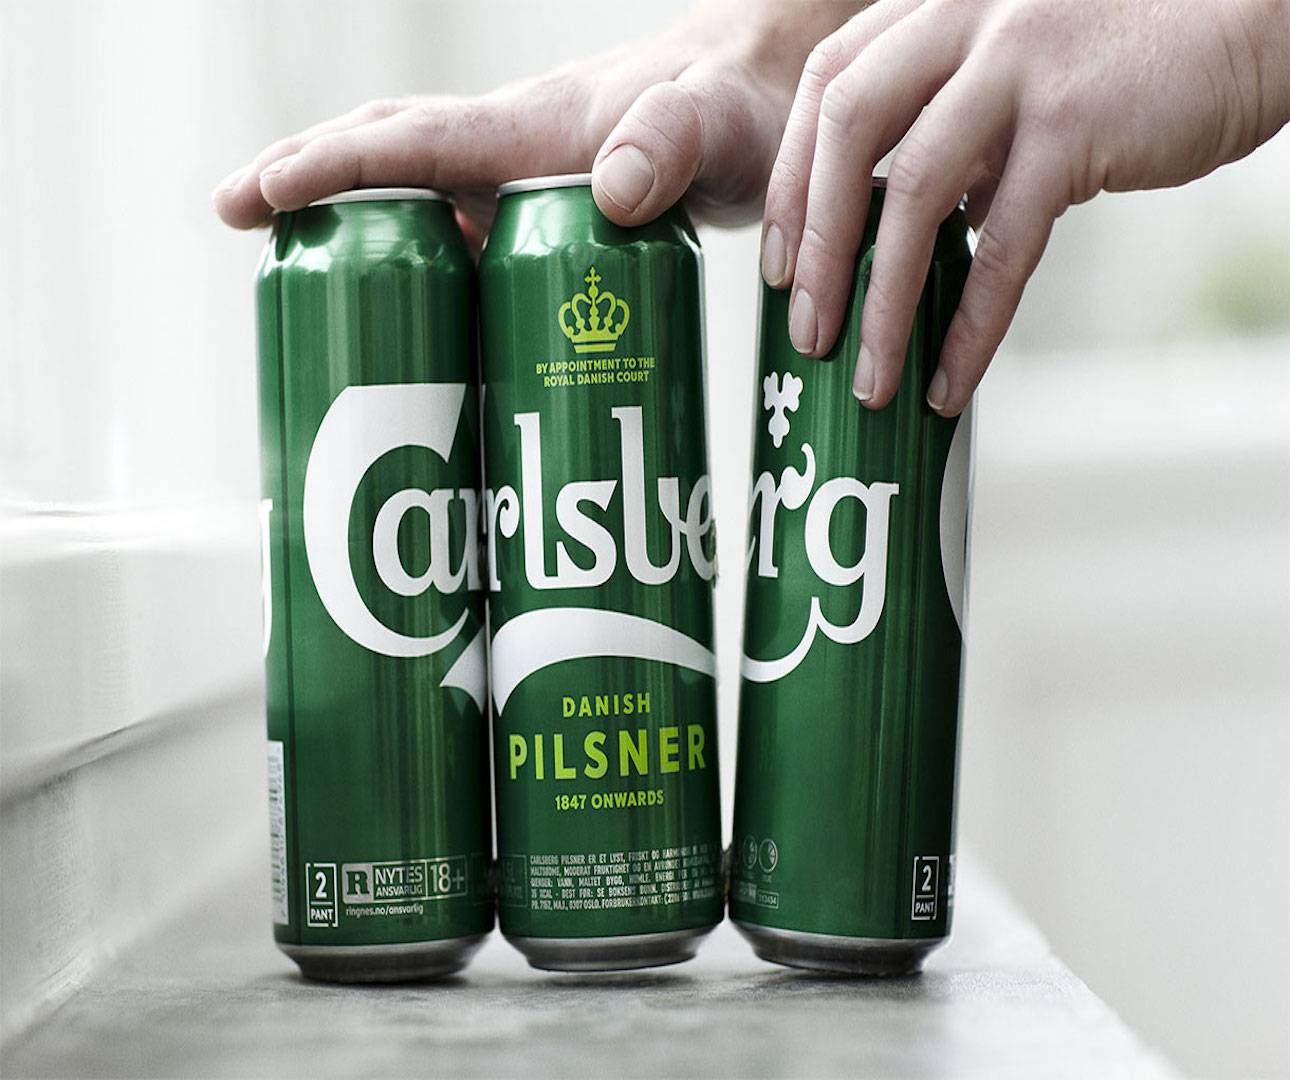 Carlsberg: Partnering for Progress